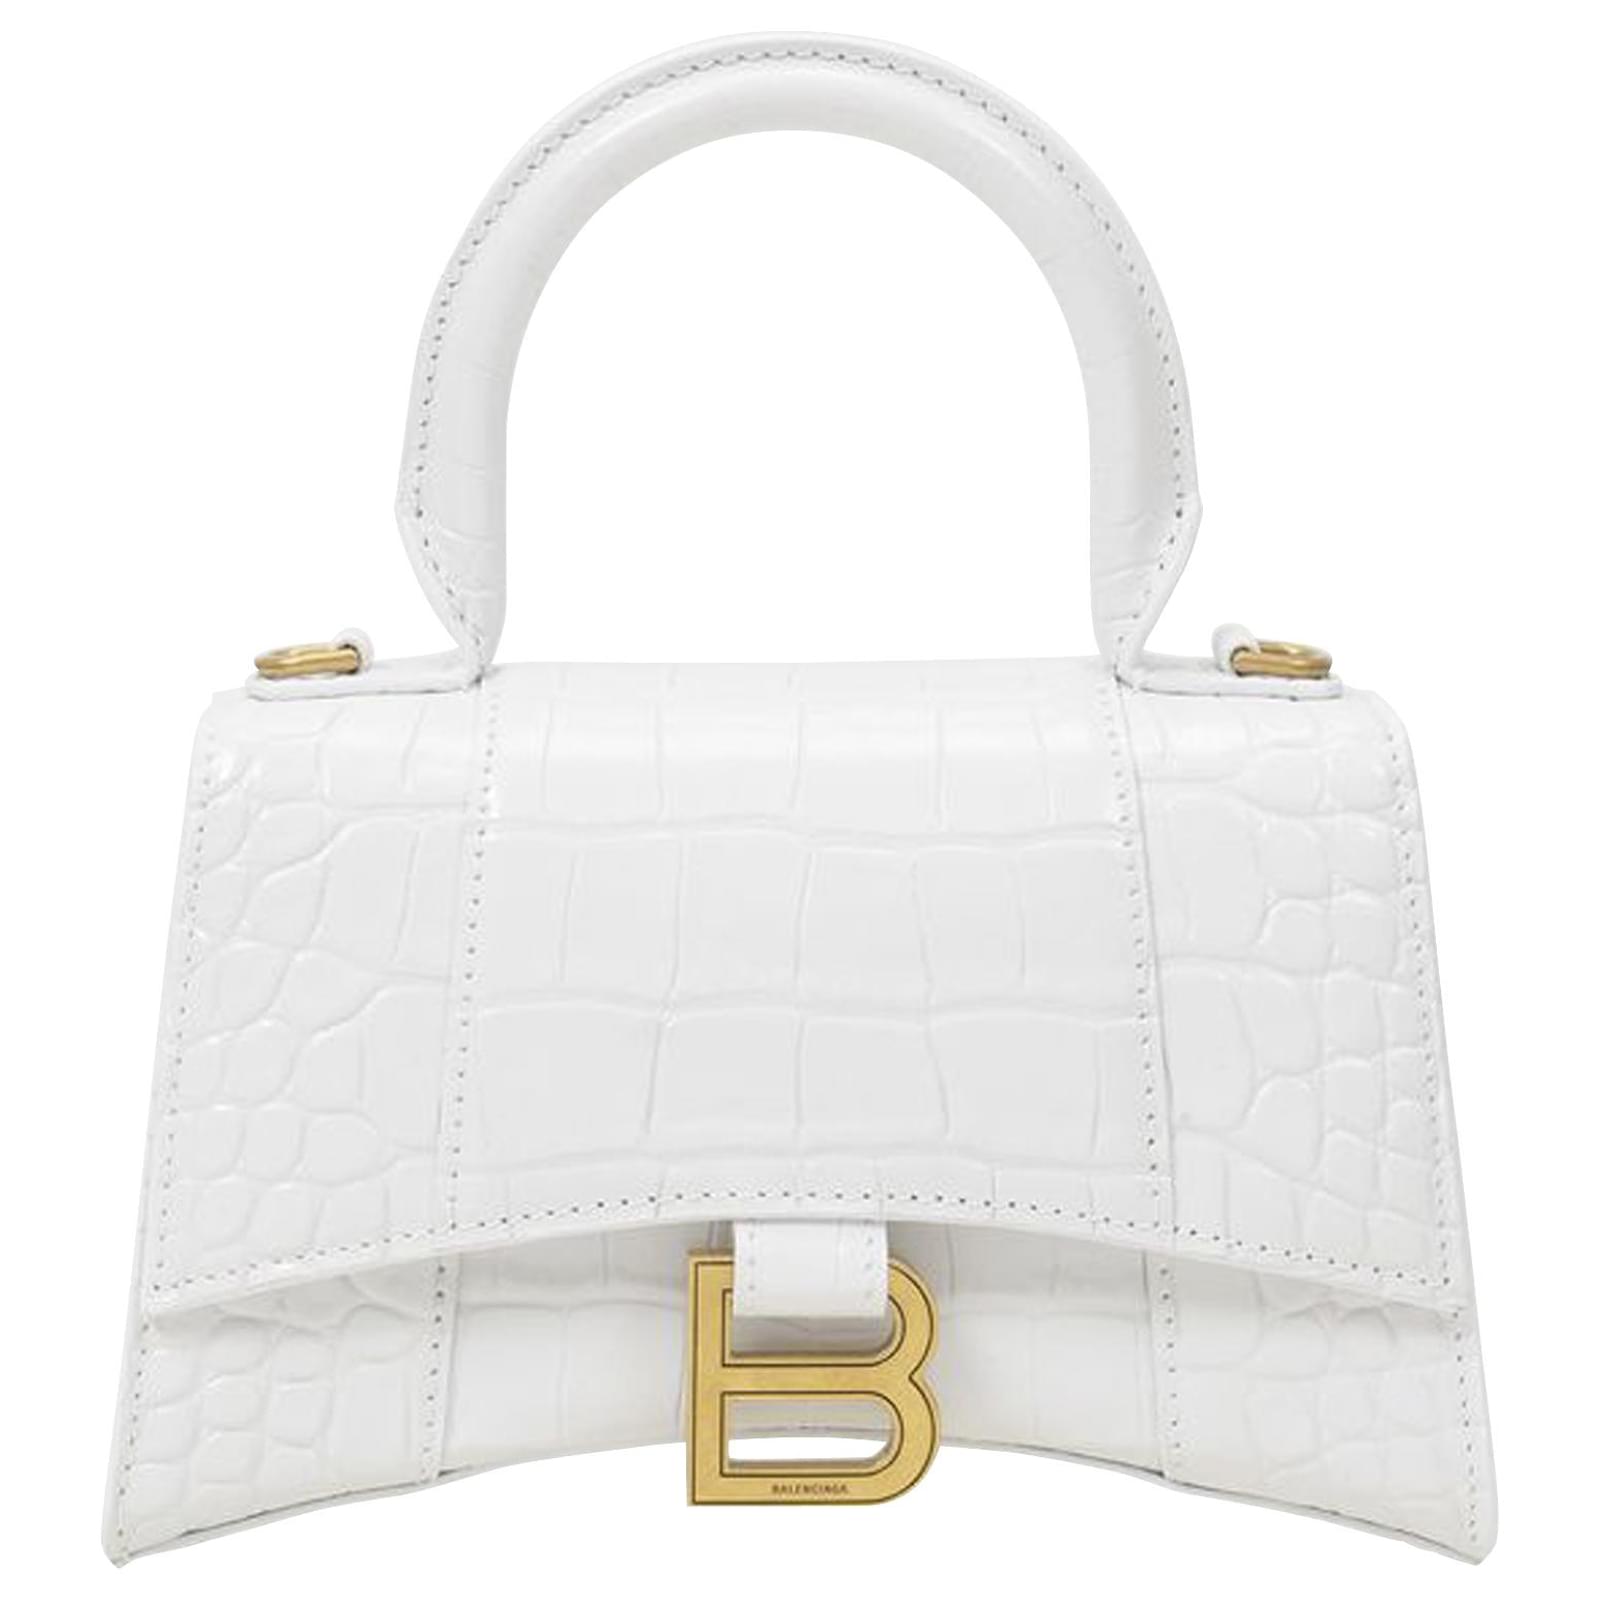 Balenciaga Hourglass White Leather Chain Wallet Bag New  eBay